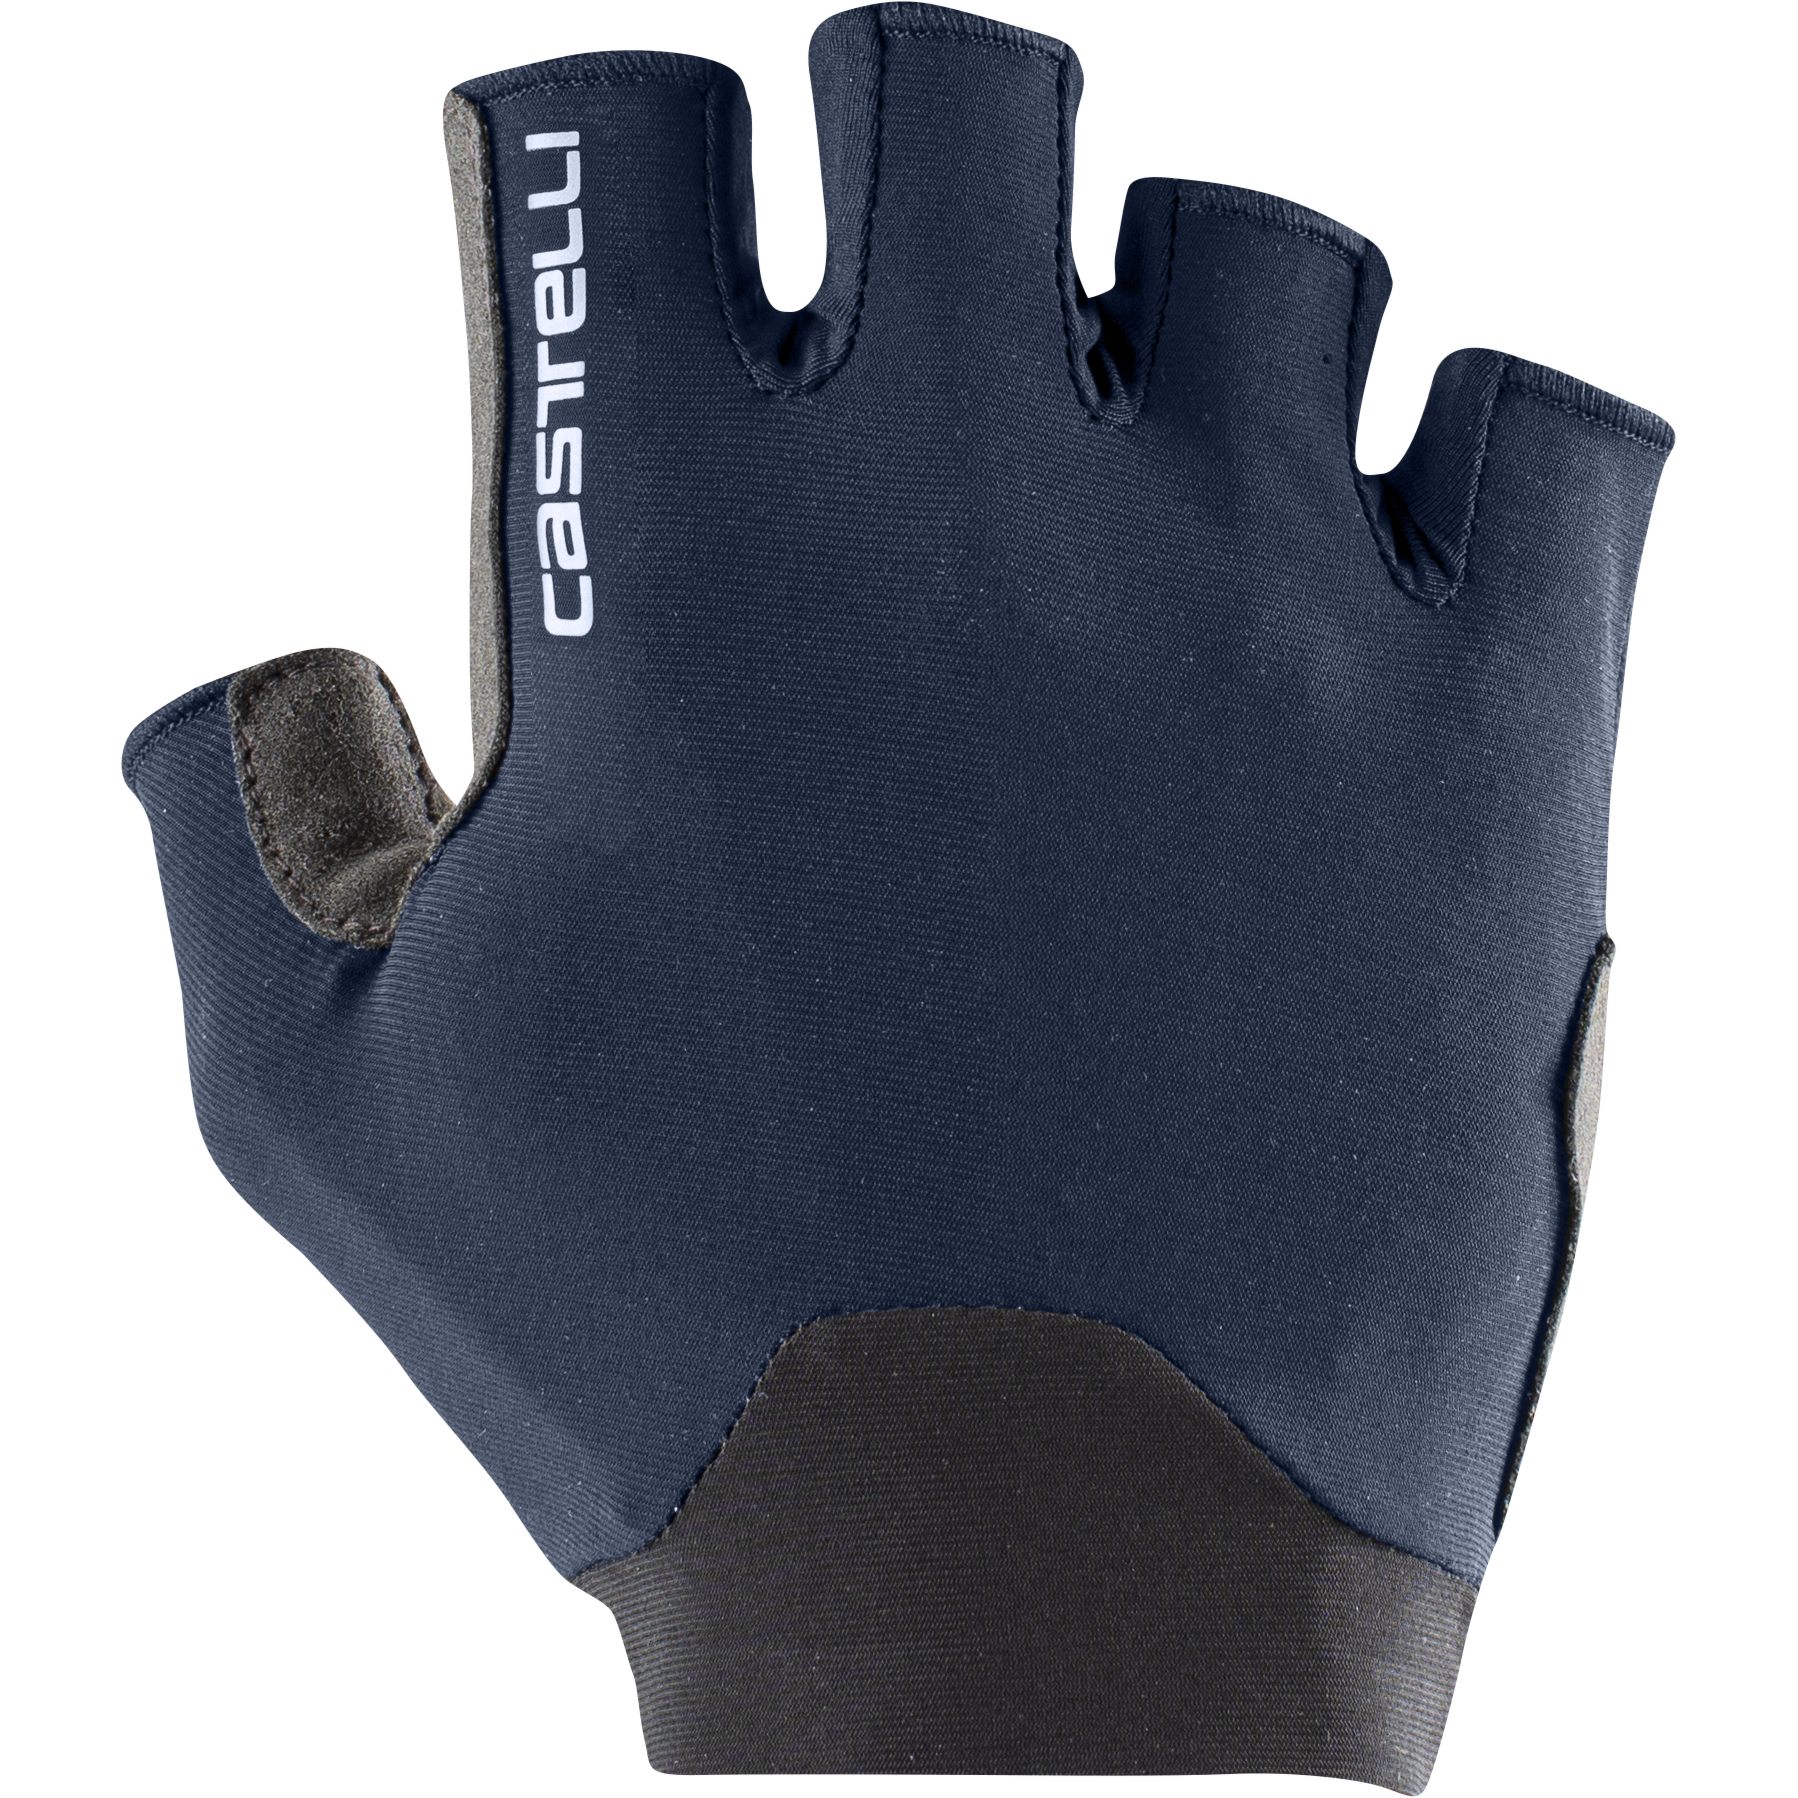 Productfoto van Castelli Endurance Gloves - belgian blue 424